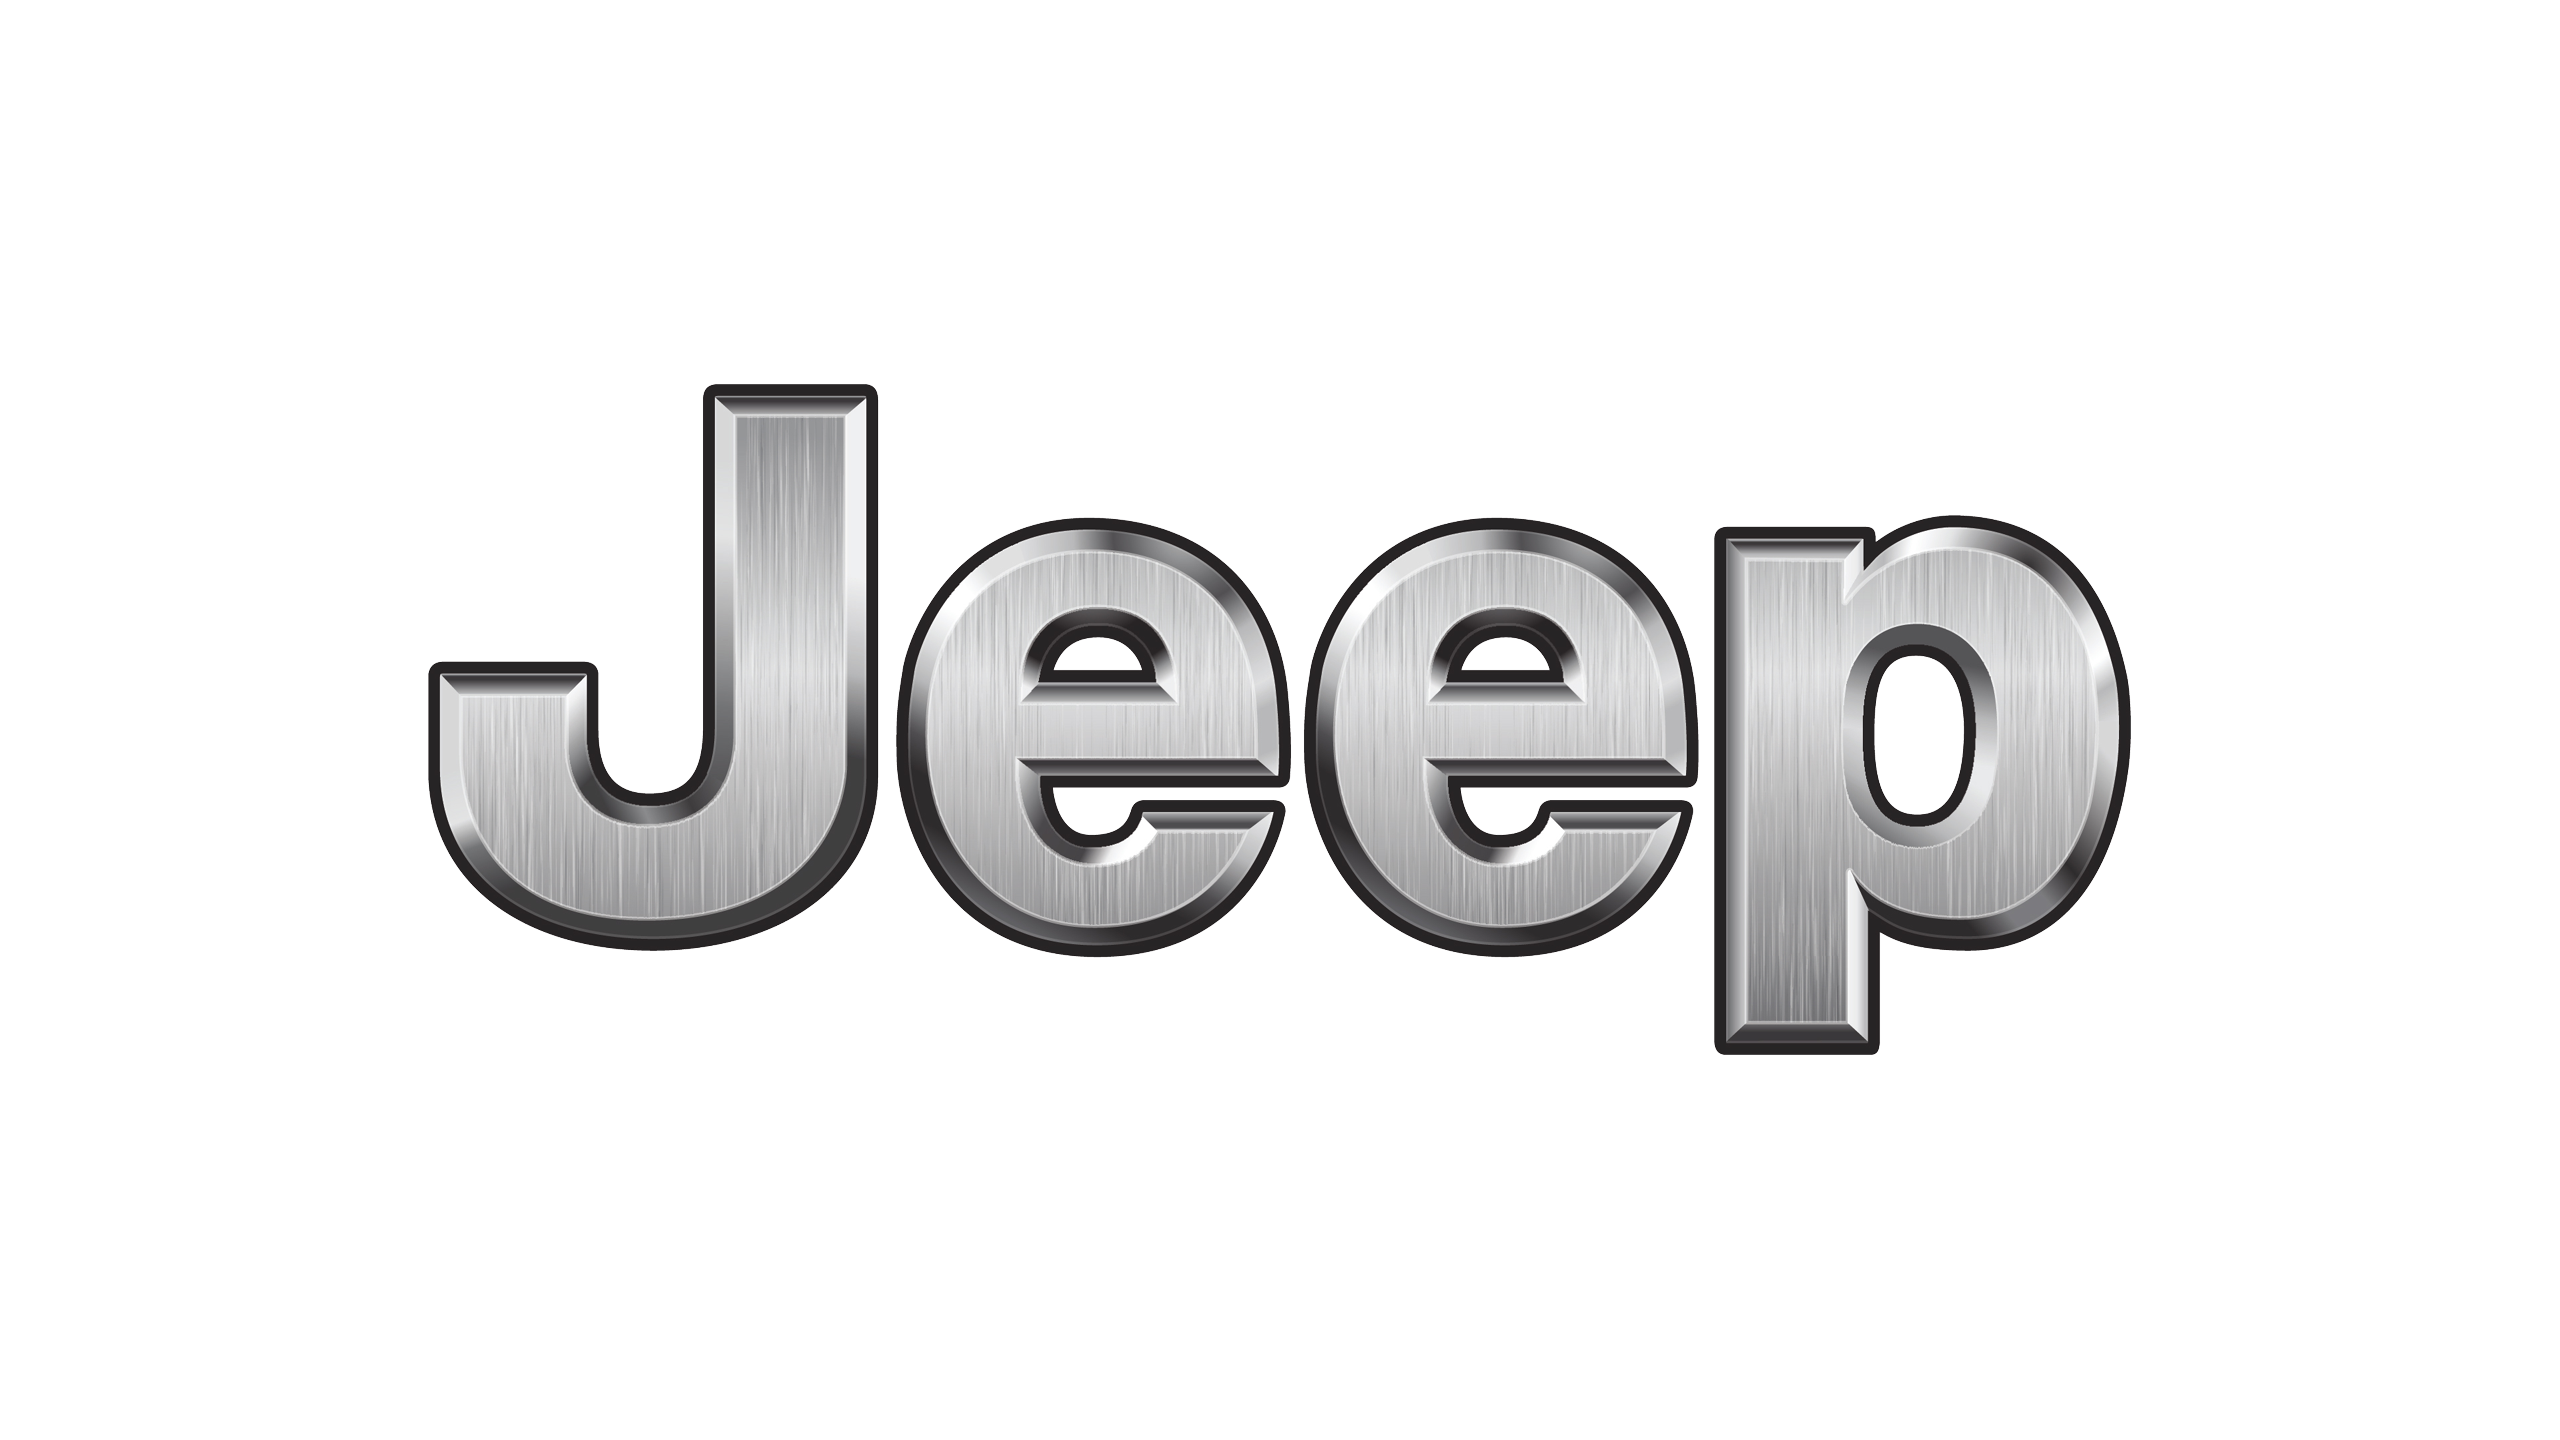 logo jeep